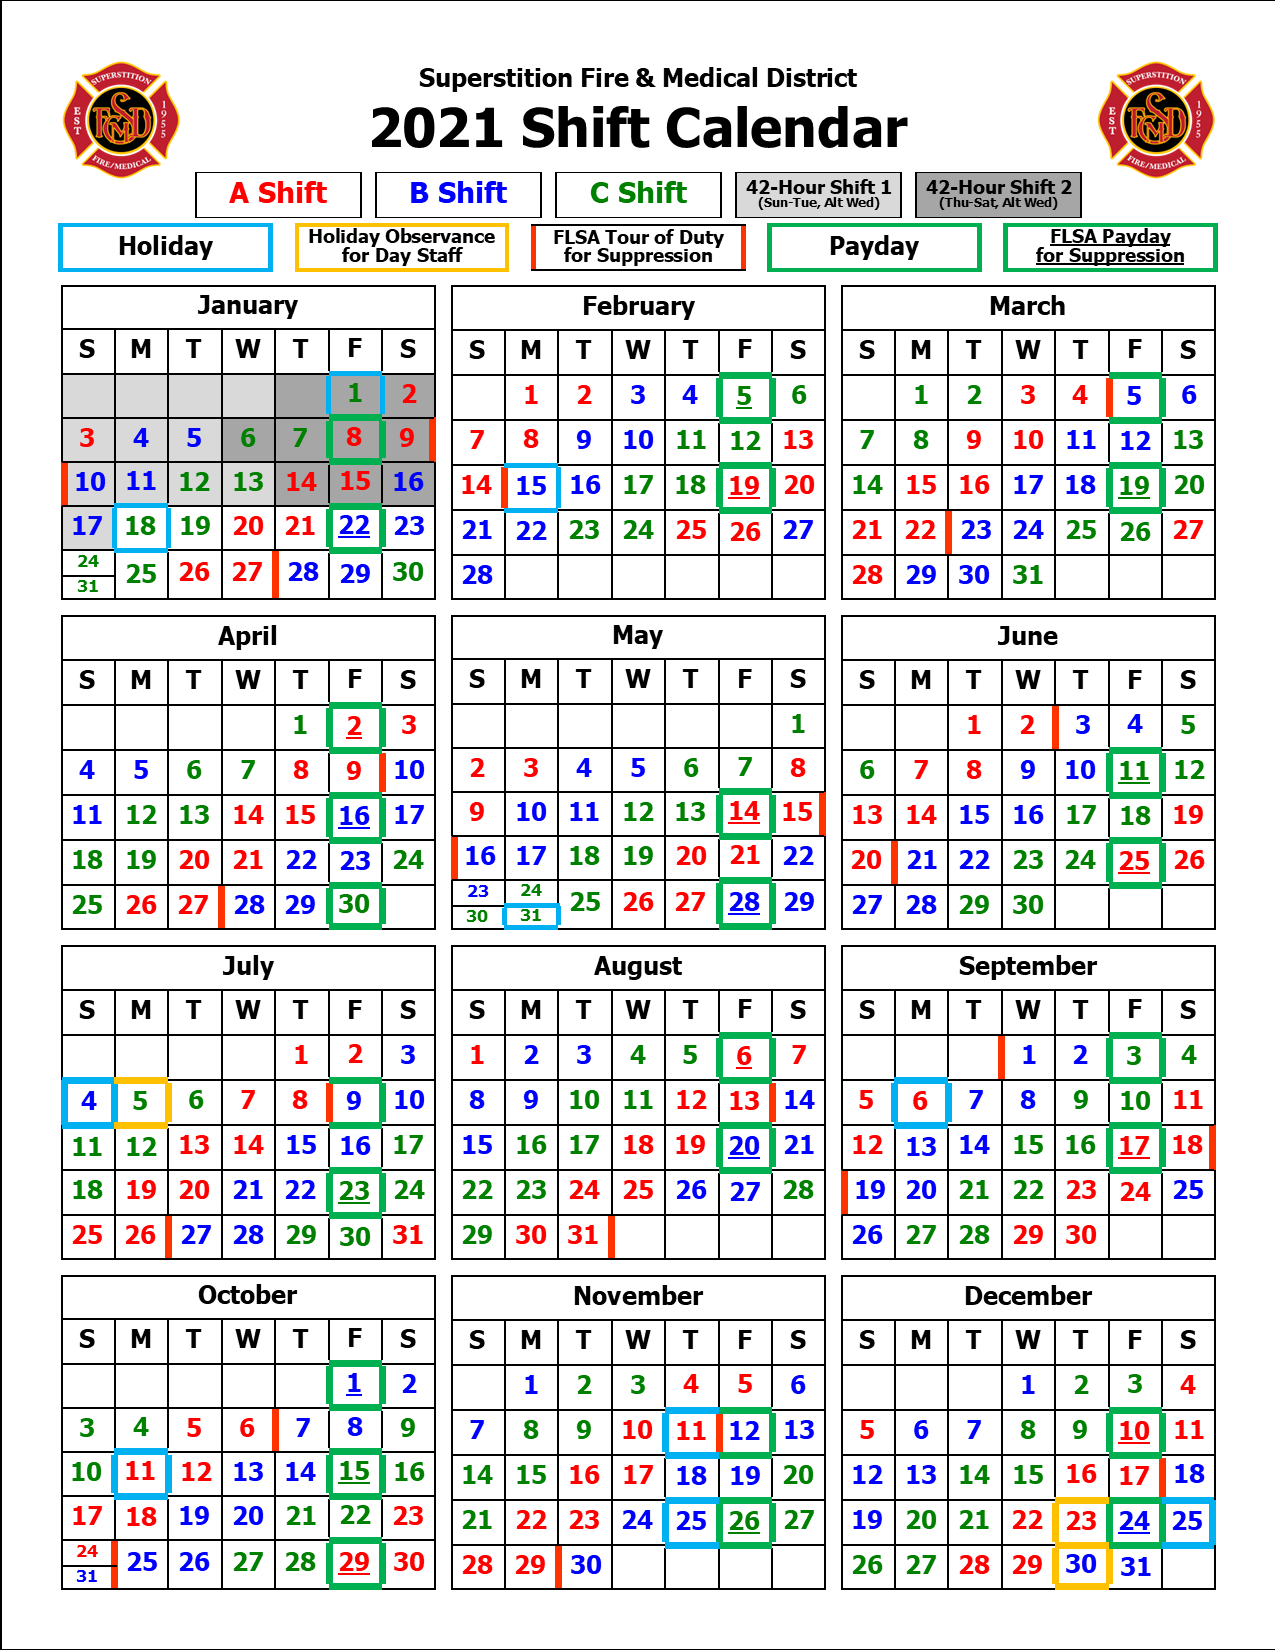 Shift Calendars Superstition Fire & Medical District